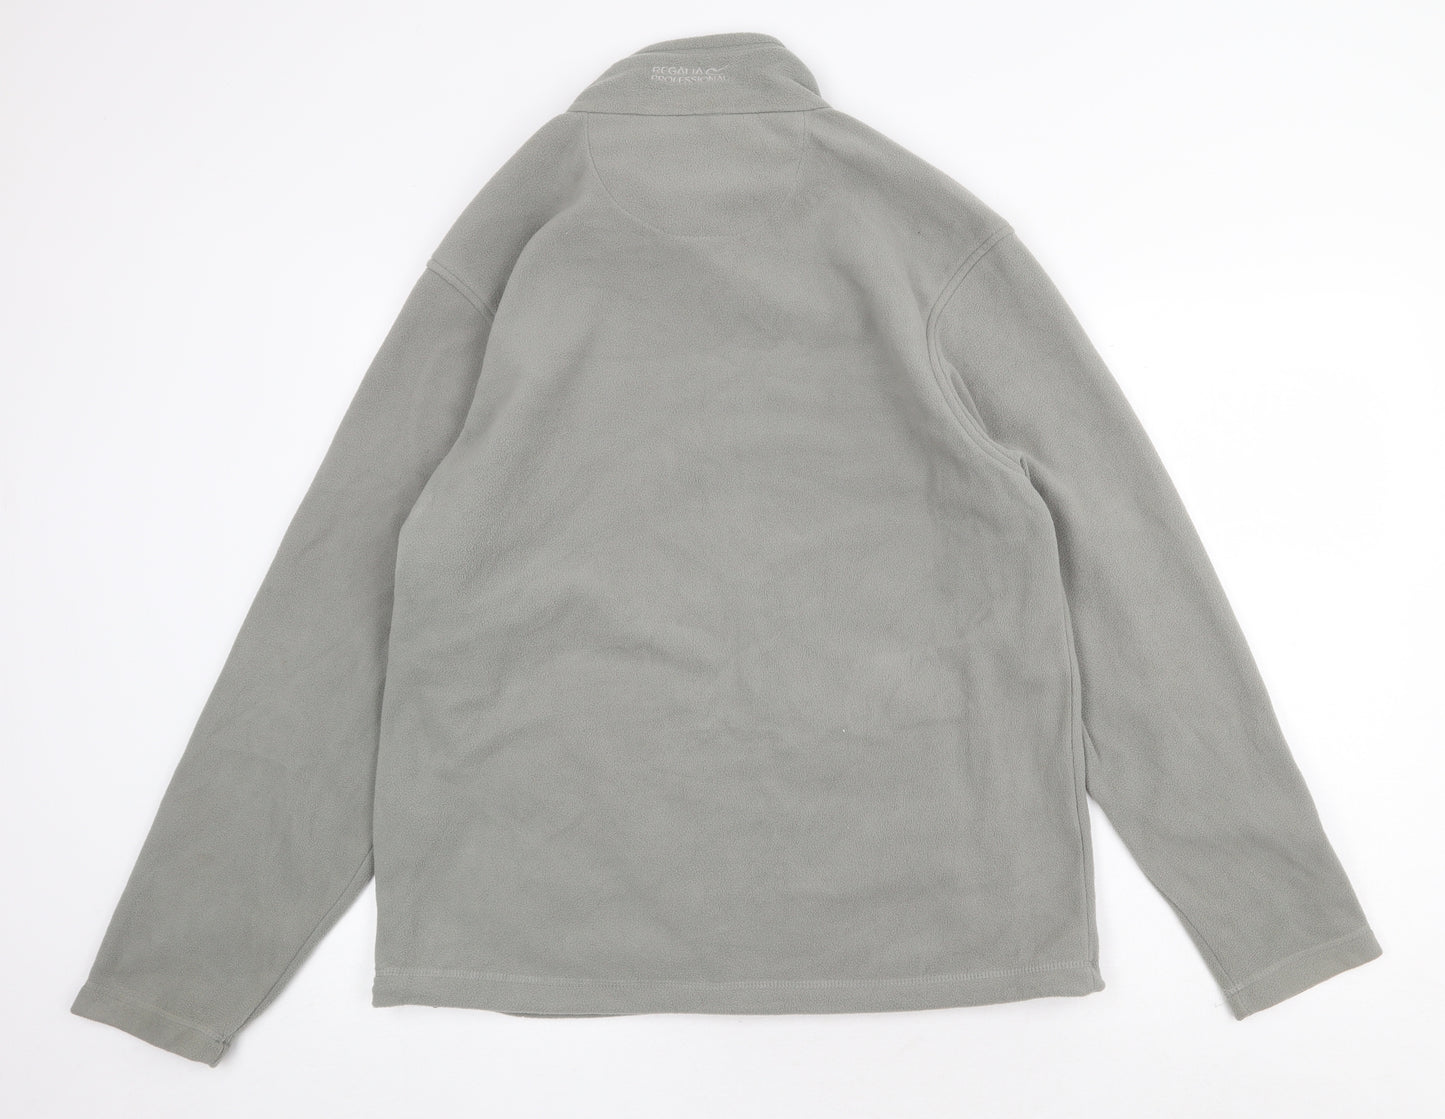 Regatta Womens Grey Jacket Size L Zip - Zipped Pockets